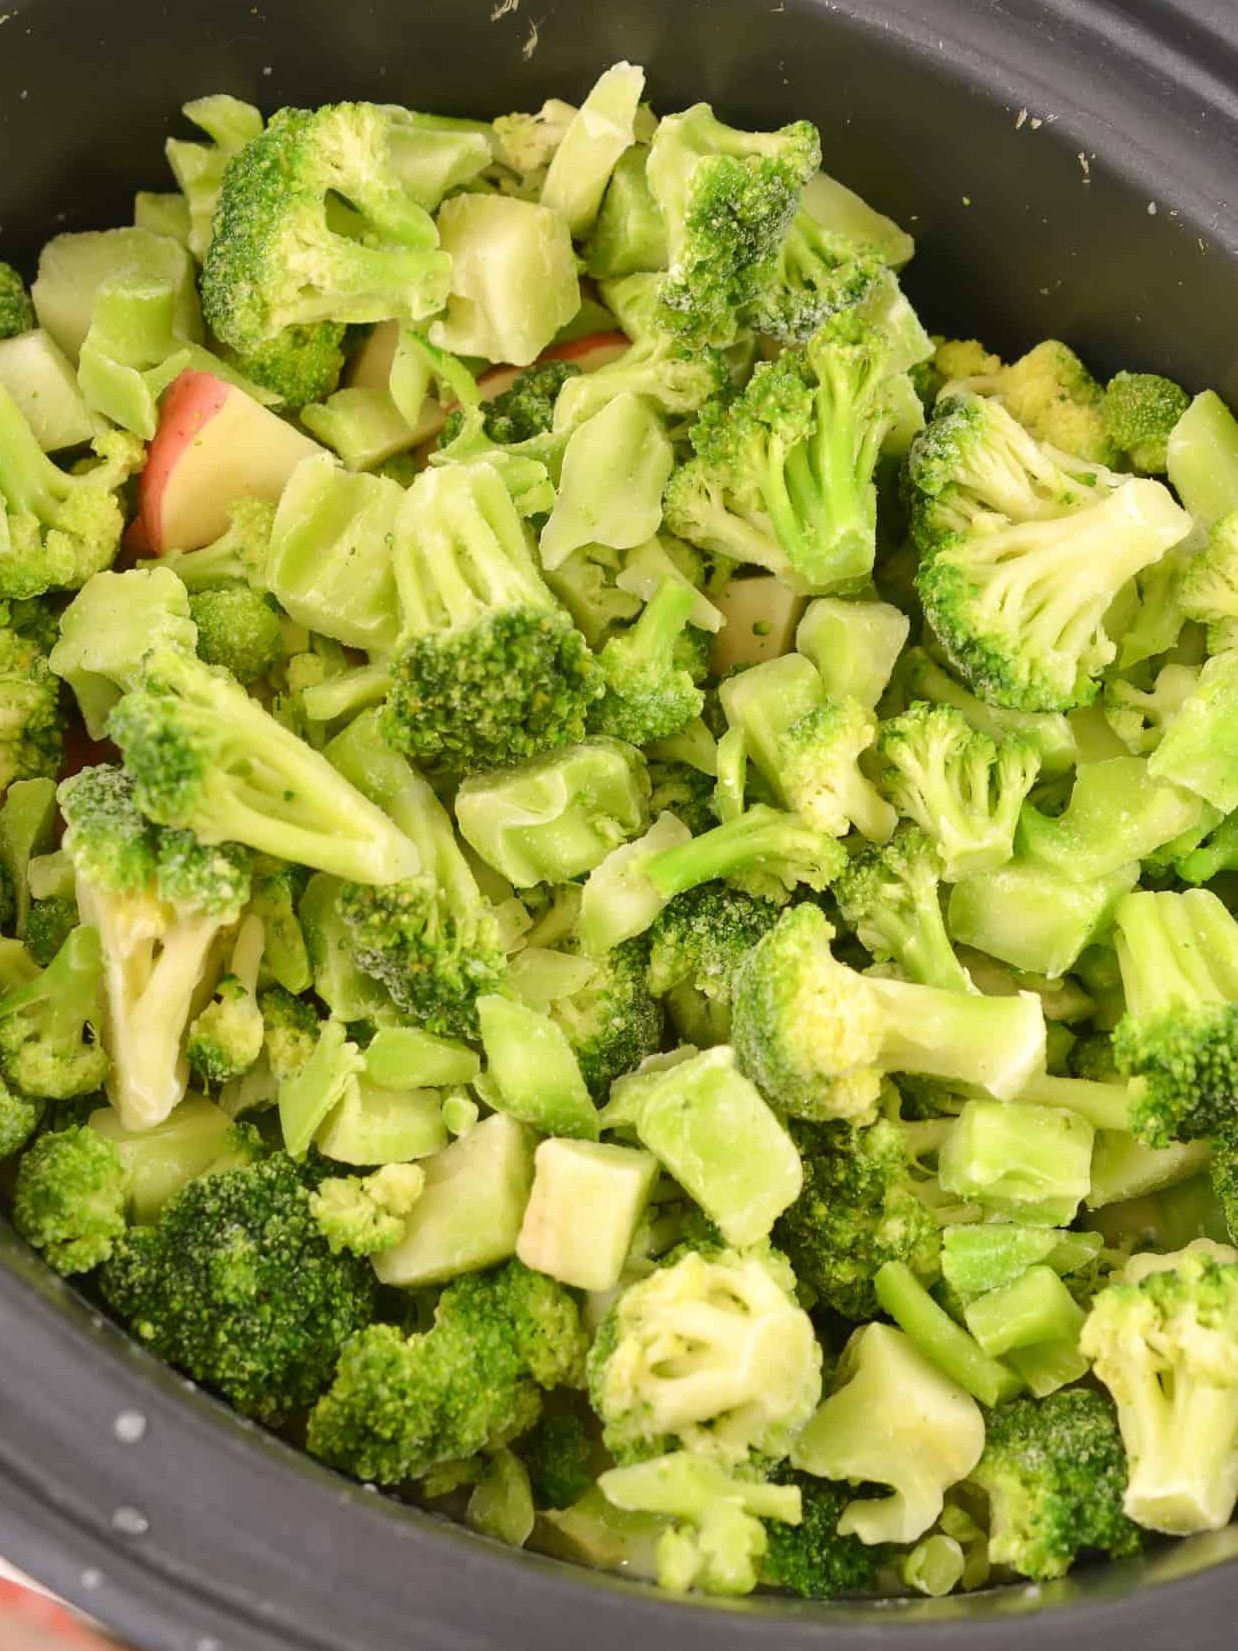 Add broccoli florets.